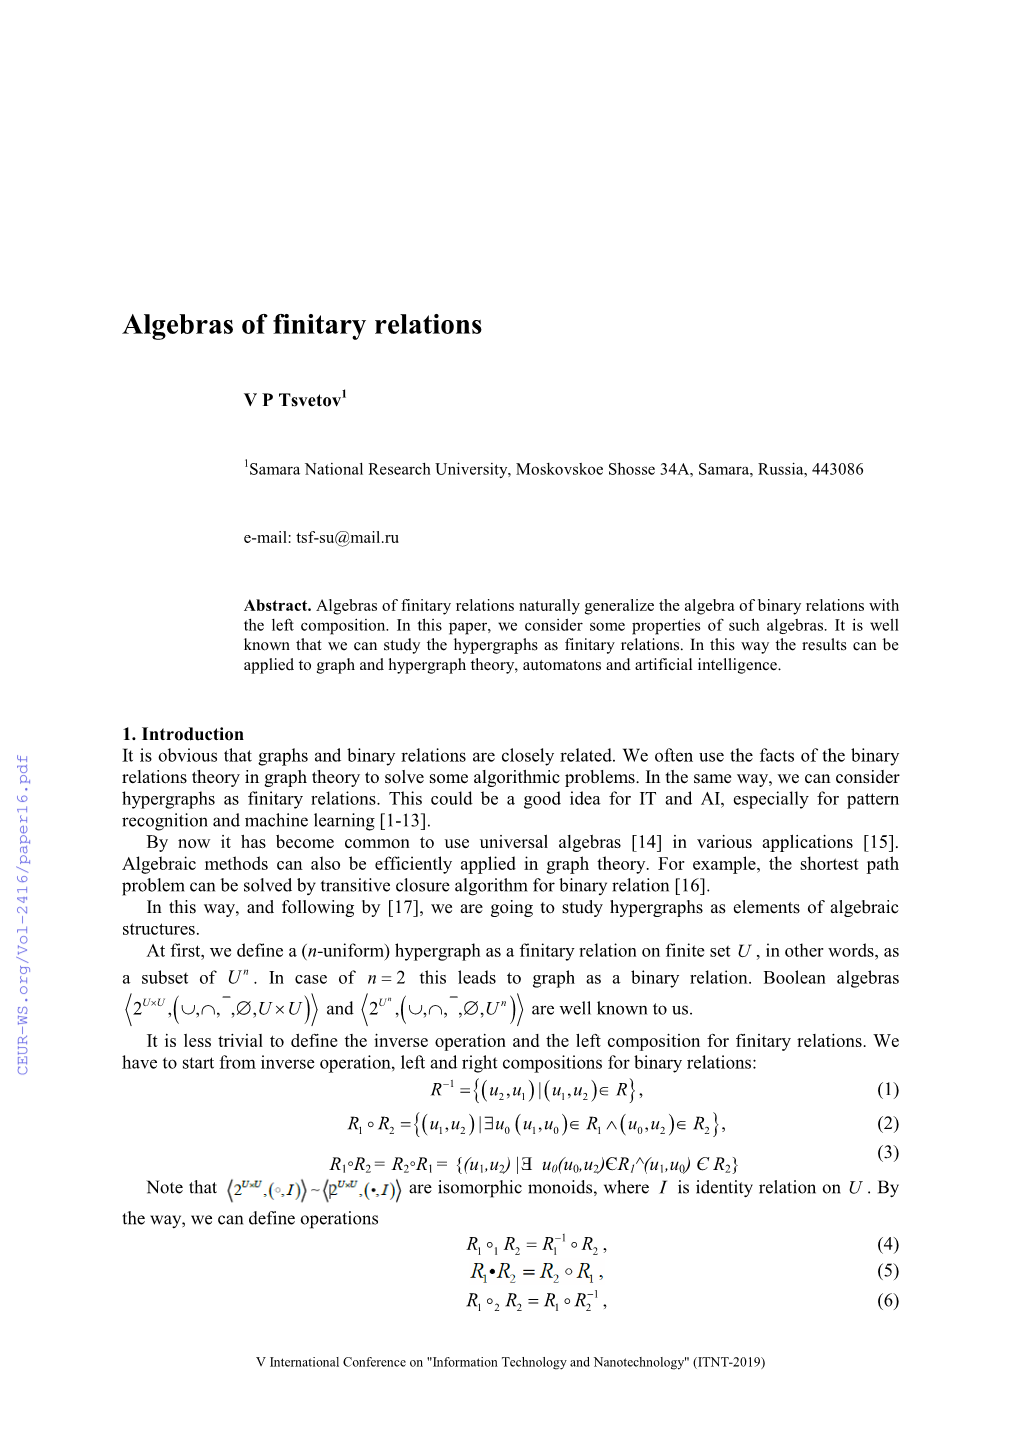 Algebras of Finitary Relations